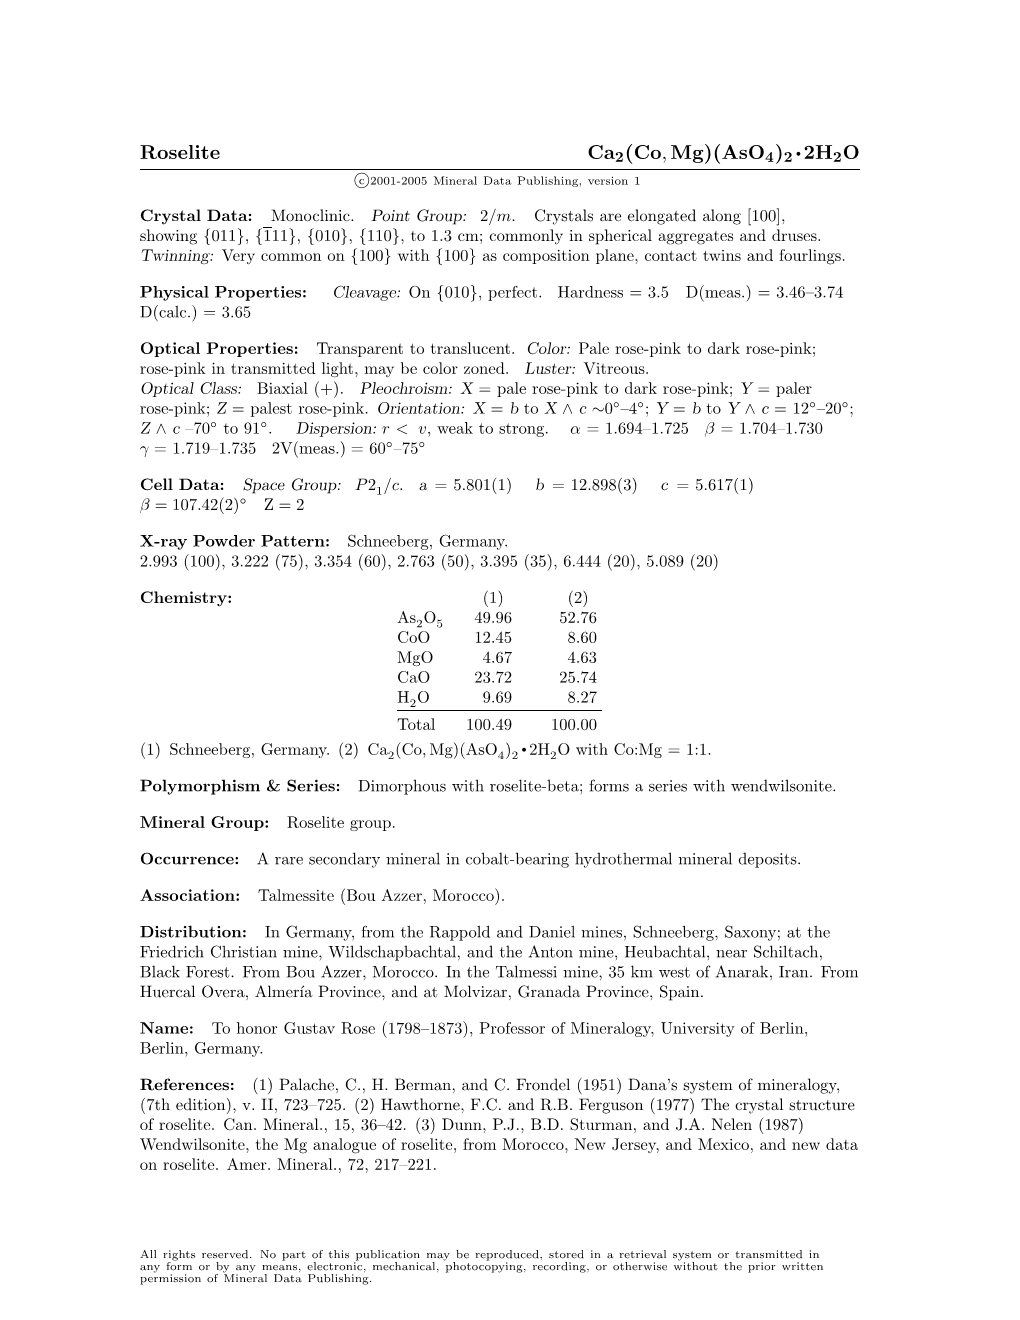 Roselite Ca2(Co, Mg)(Aso4)2 • 2H2O C 2001-2005 Mineral Data Publishing, Version 1